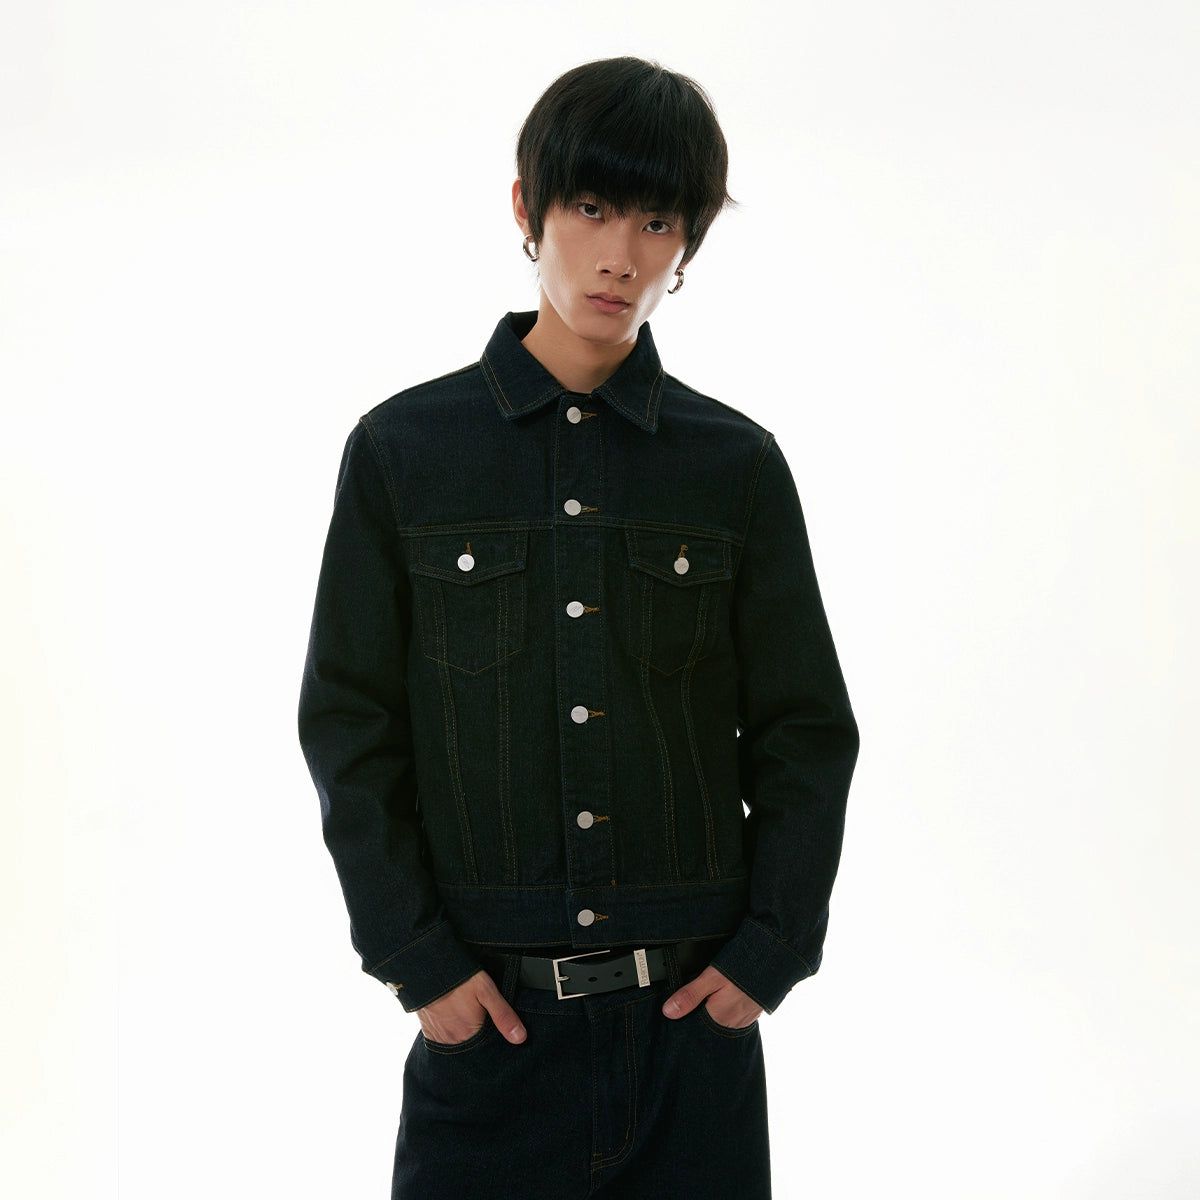 Basic Buttoned Denim Jacket Korean Street Fashion Jacket By Funky Fun Shop Online at OH Vault